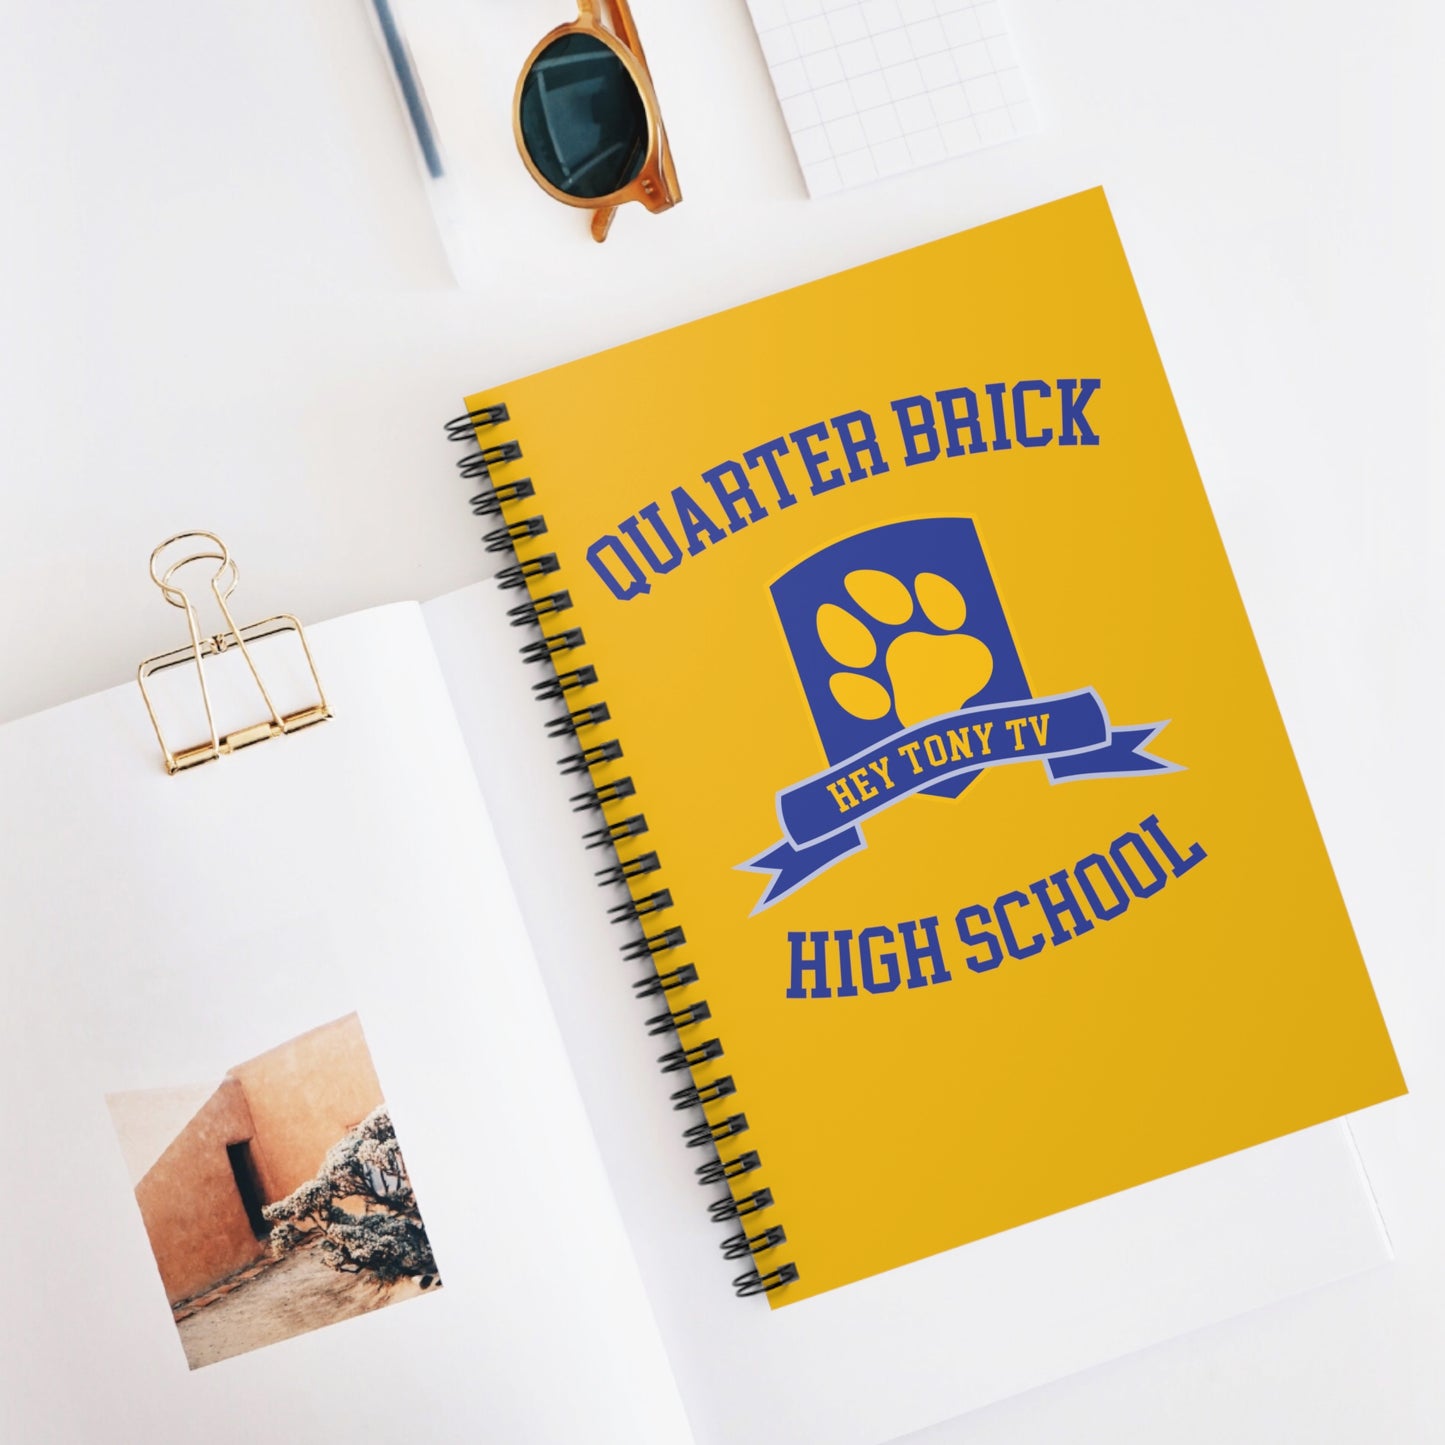 QuarterBrick High School Spiral Notebook - Ruled Line